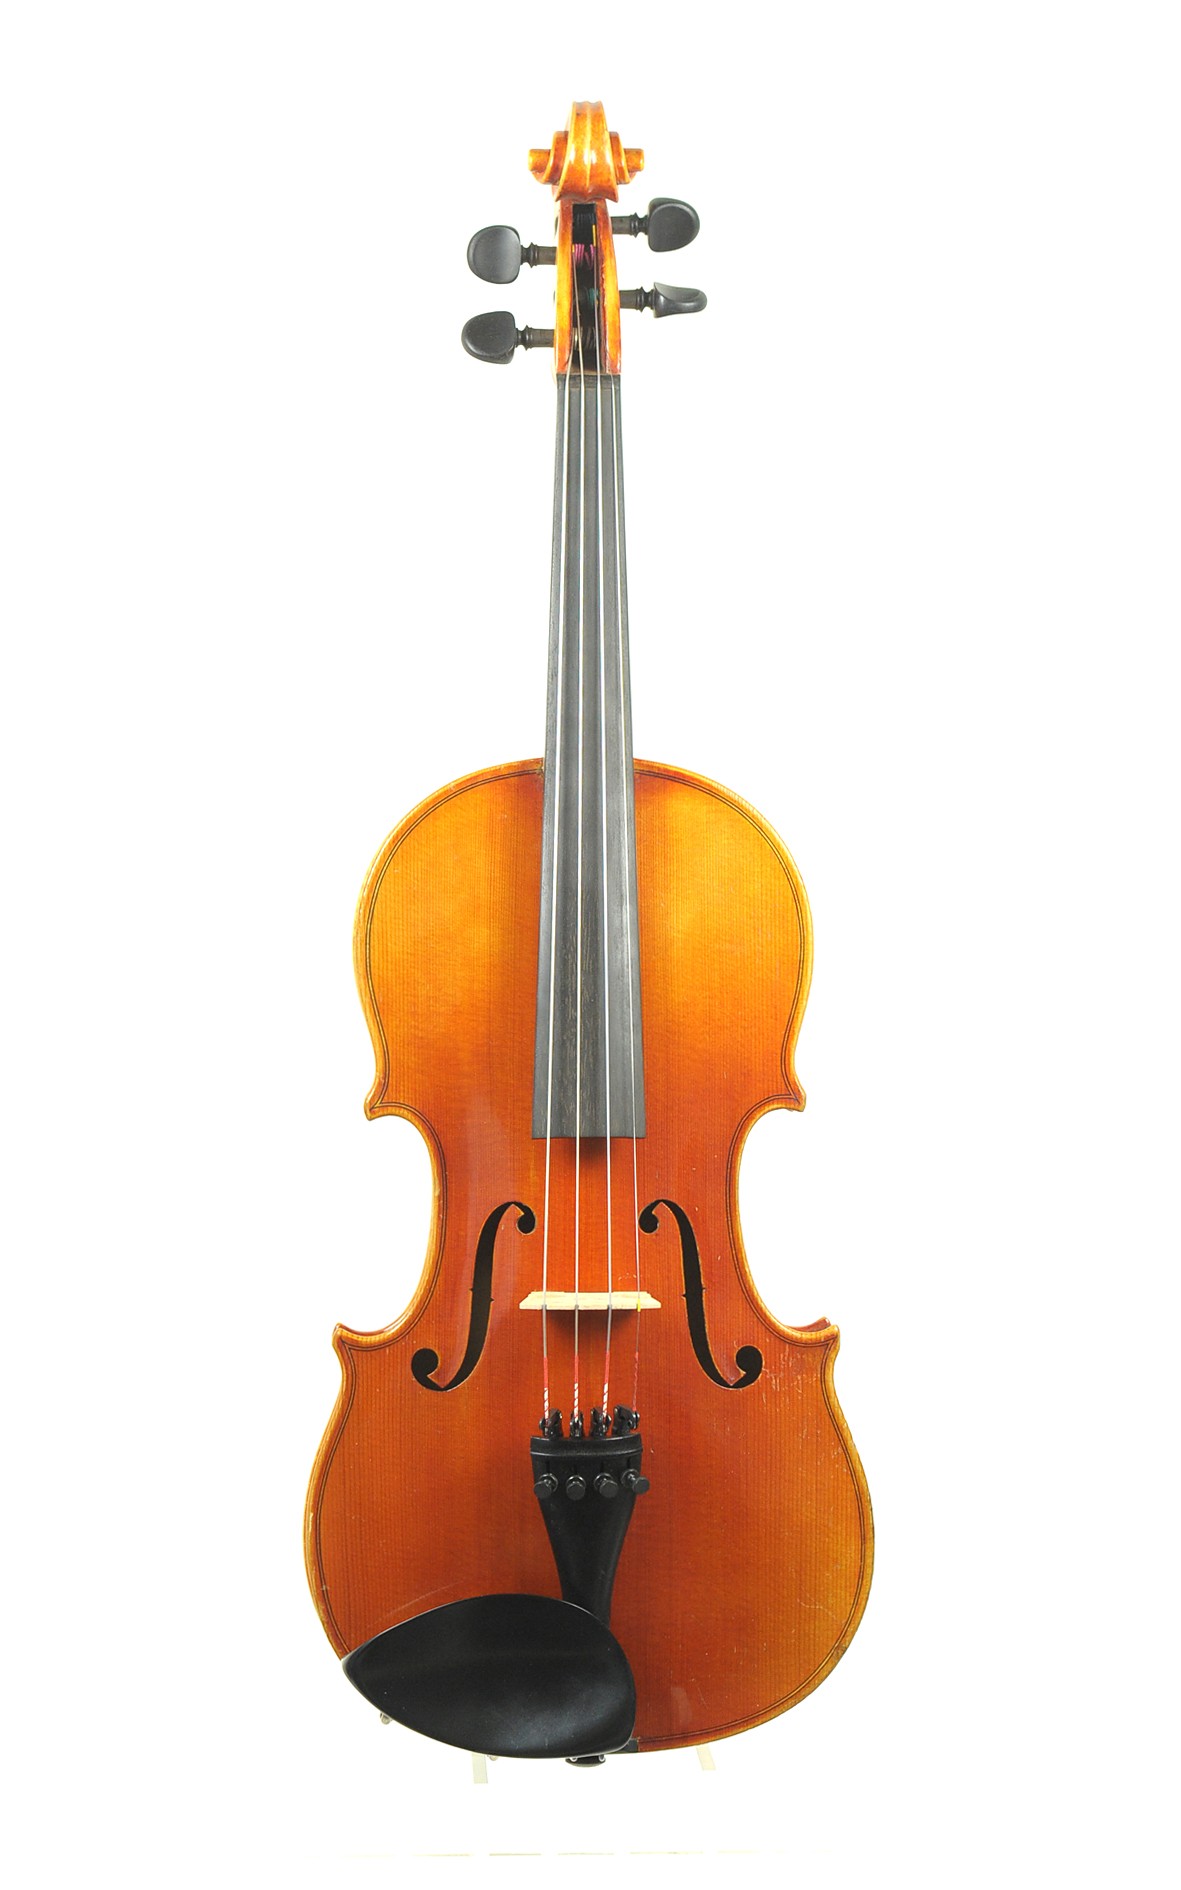 German 3/4 master violin, after Stradivari - top view